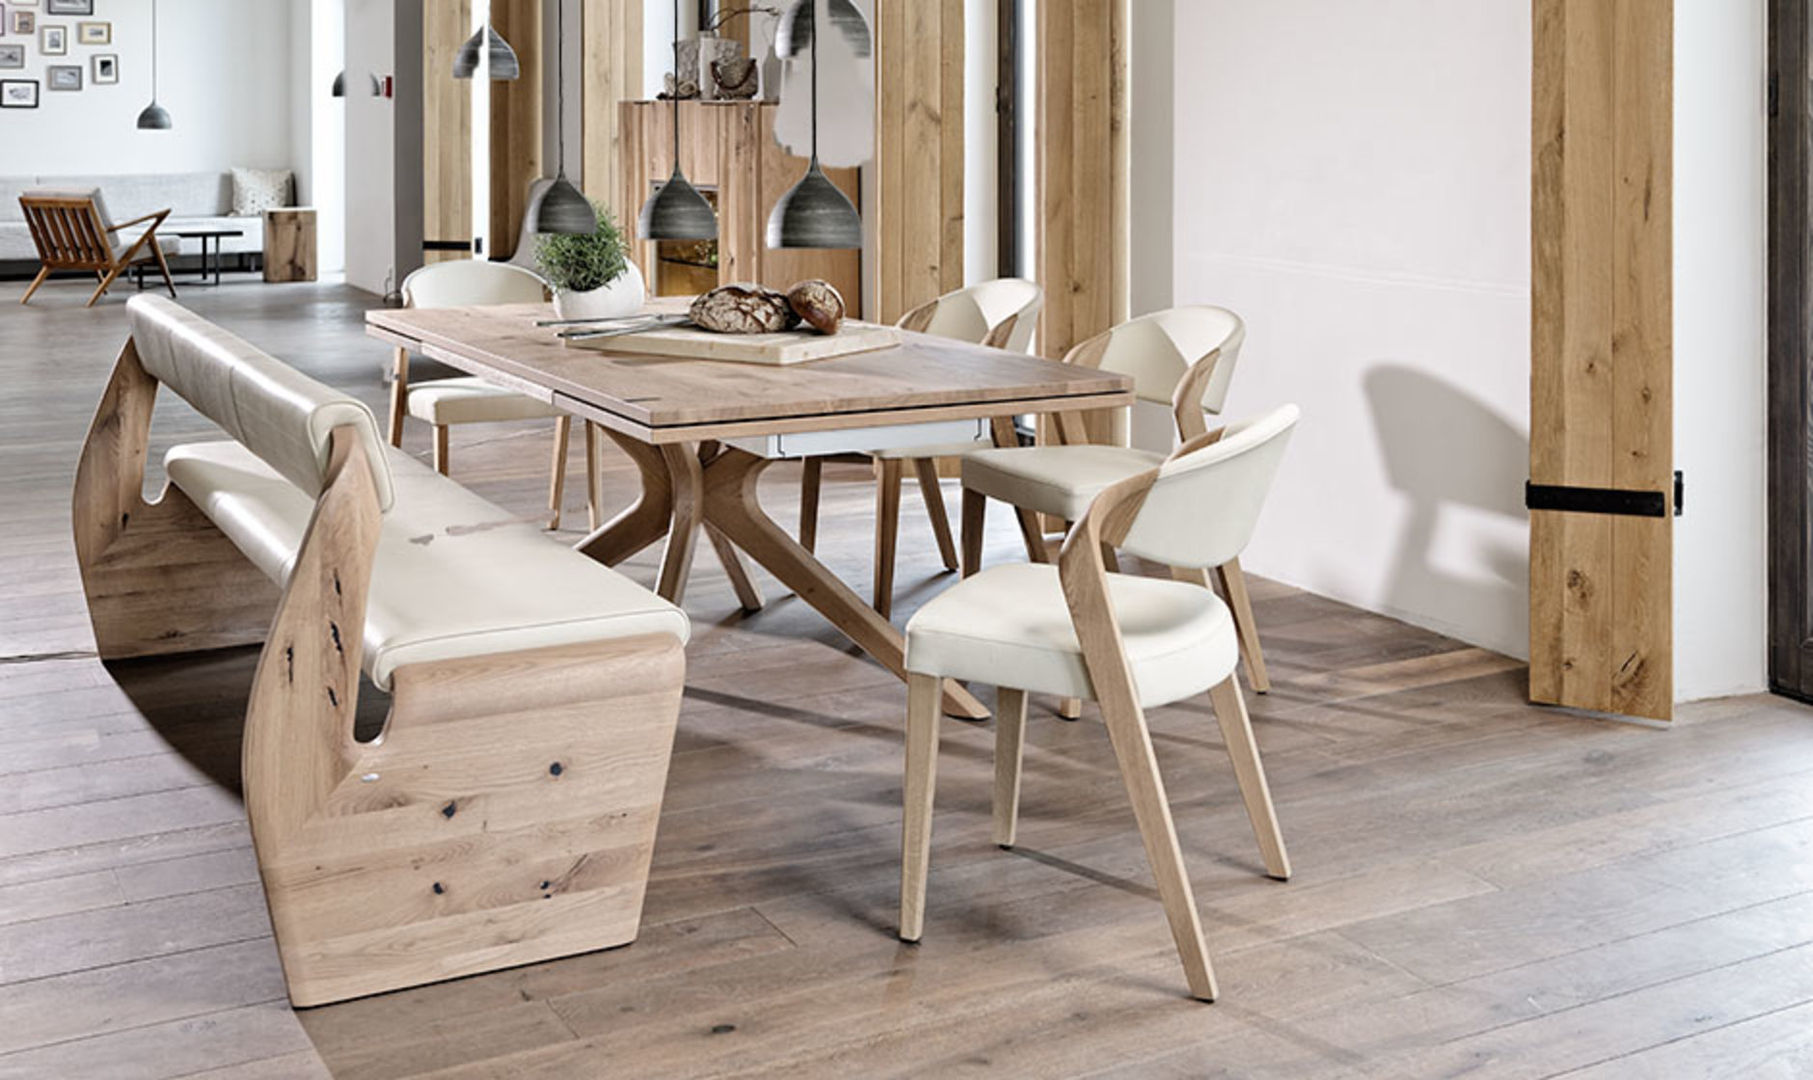 Muebles de diseño alemán, Imagine Outlet Imagine Outlet Nowoczesna jadalnia Drewno O efekcie drewna Stoły